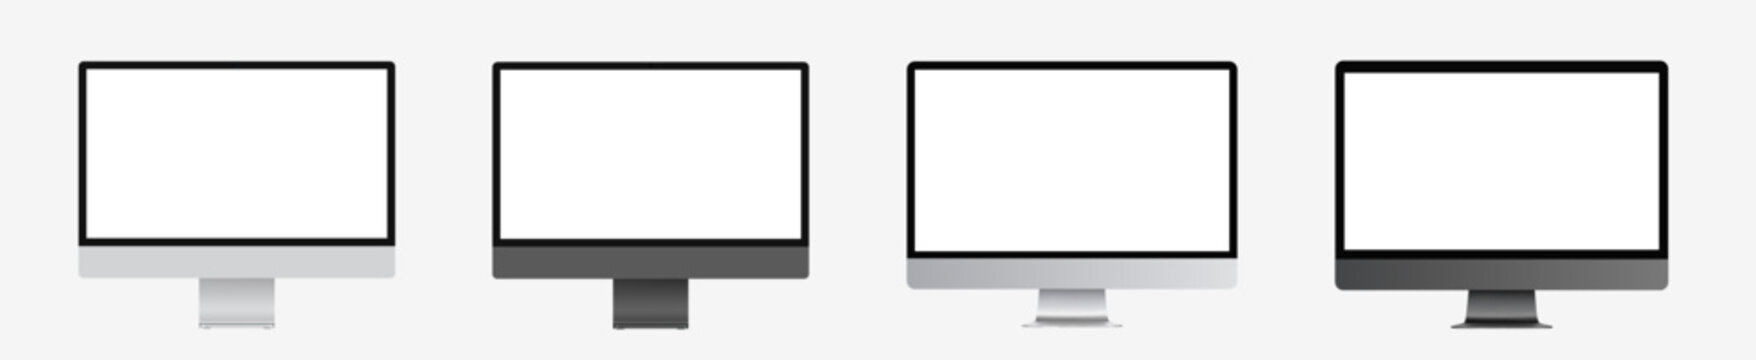 Screen mockup. Realistic computer. Apple iMac device mockup. Apple iMac monoblock monitor mock-up. Realistic computer with empty screen. Vector illustration